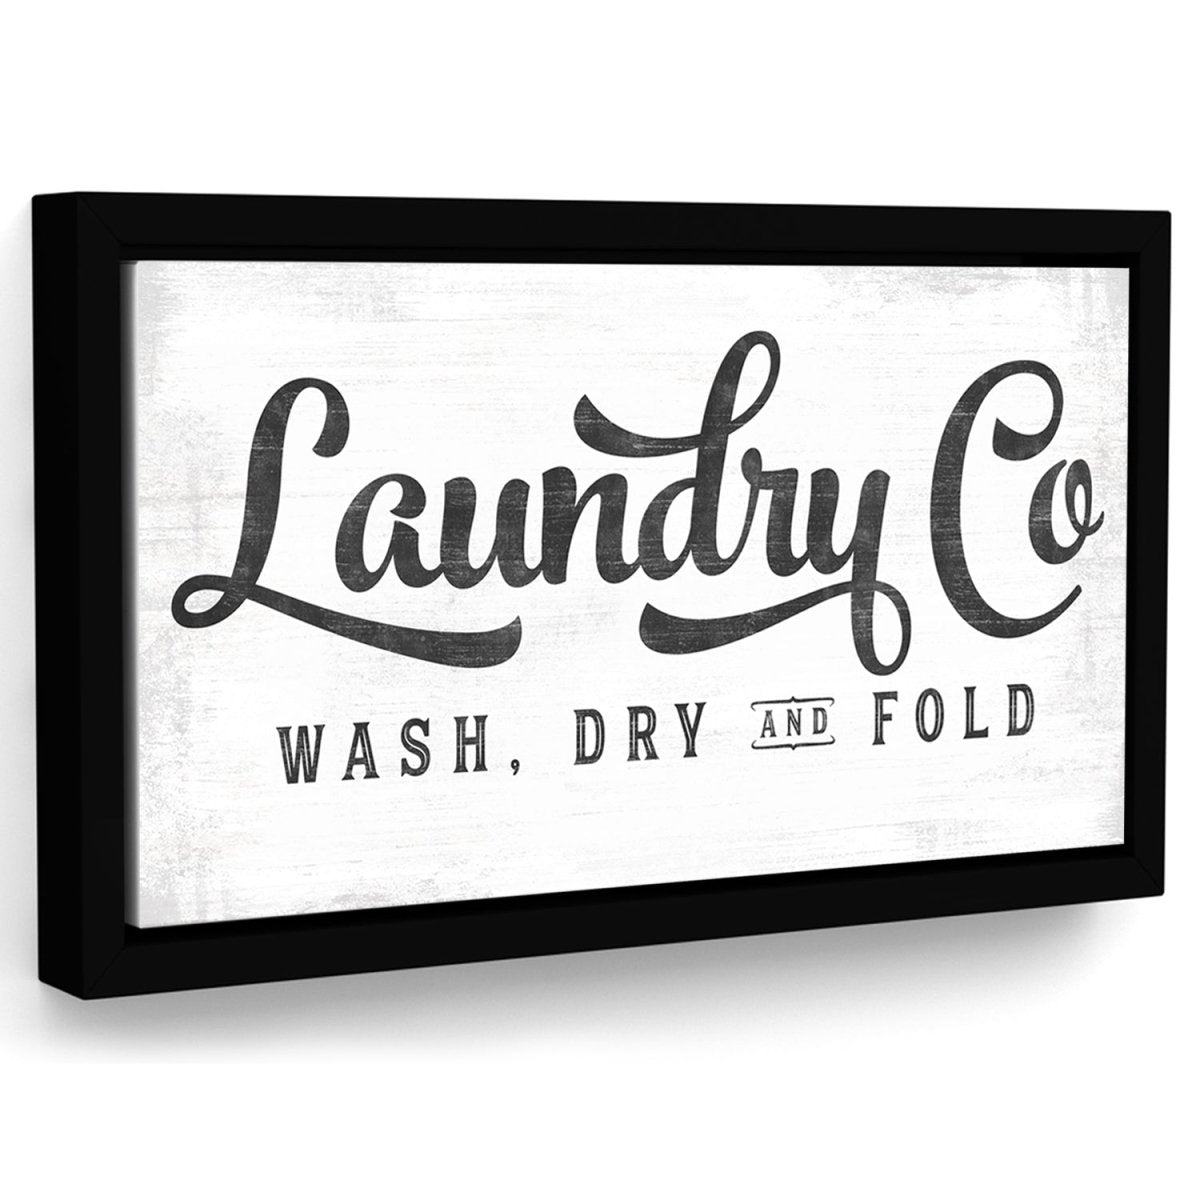 Laundry Co. Sign - Large Laundry Room Decor - Pretty Perfect Studio